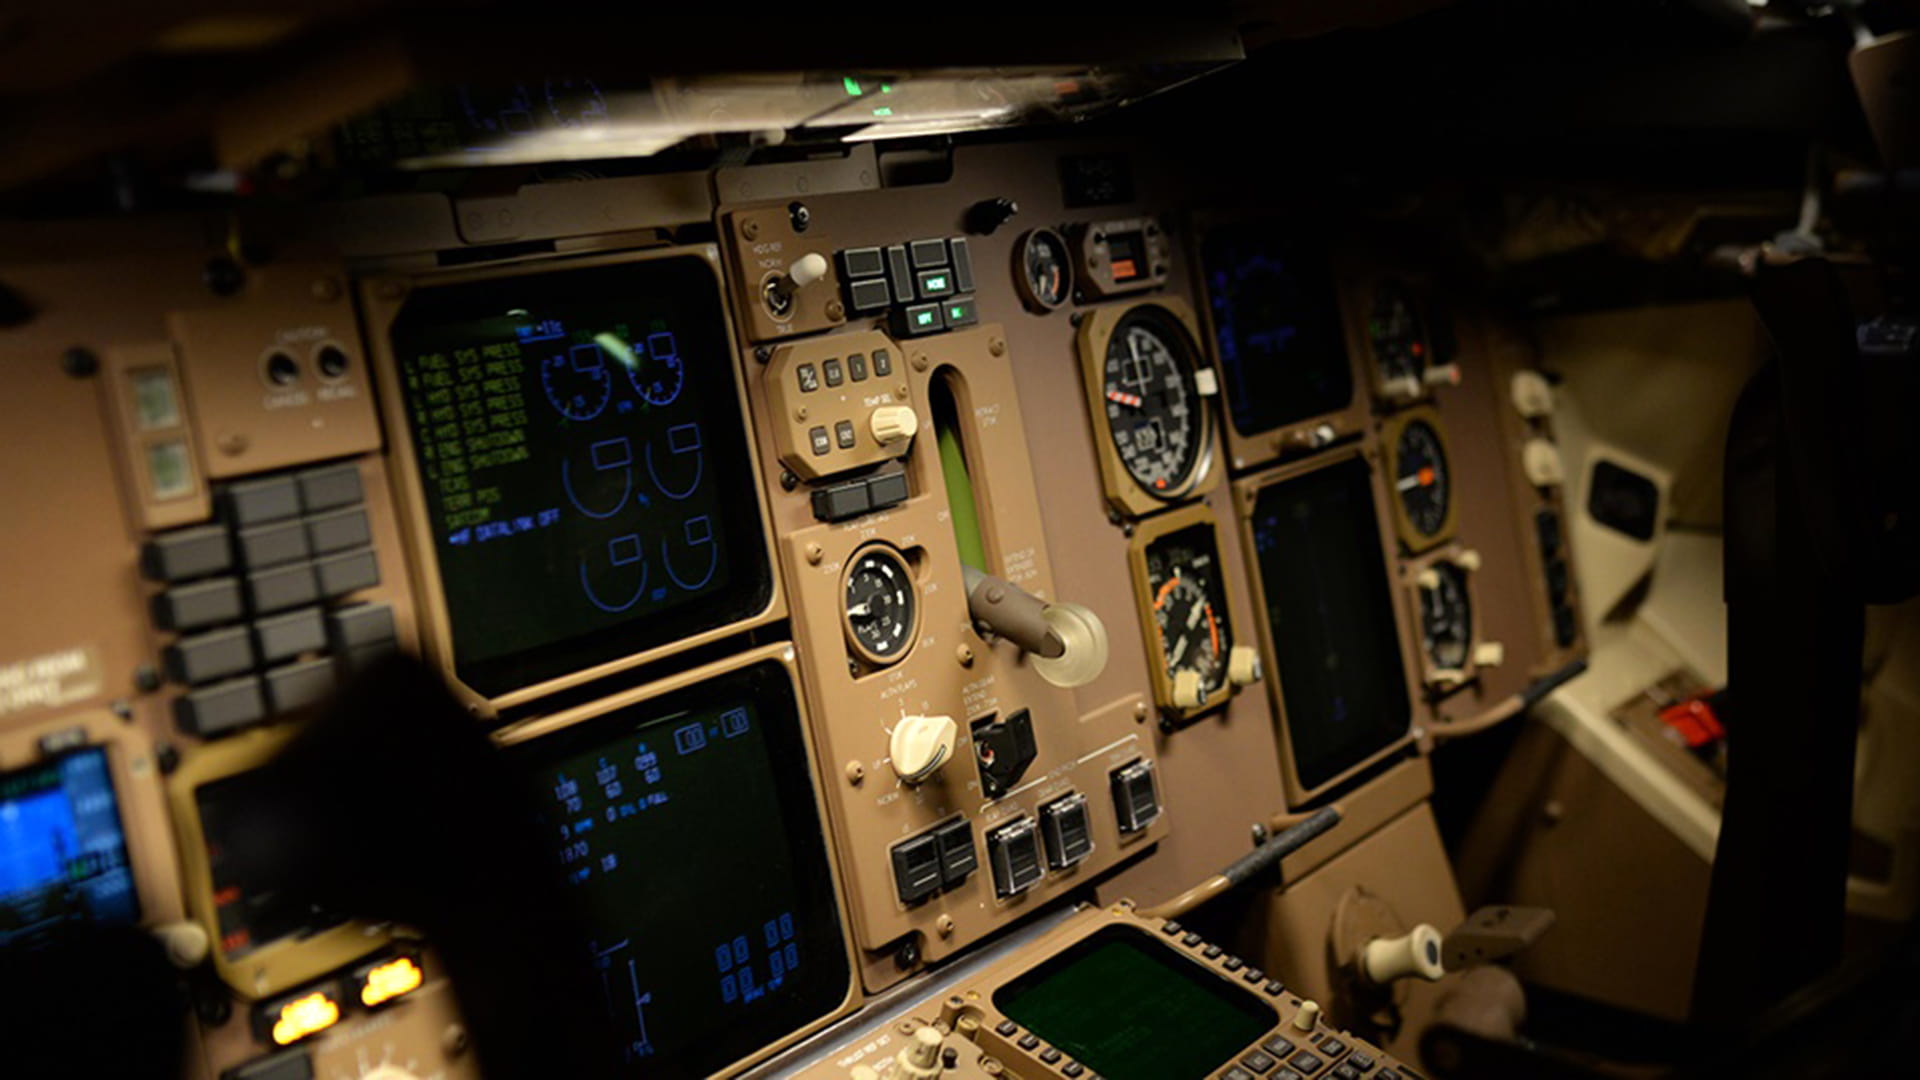 A cockpit with avionics systems